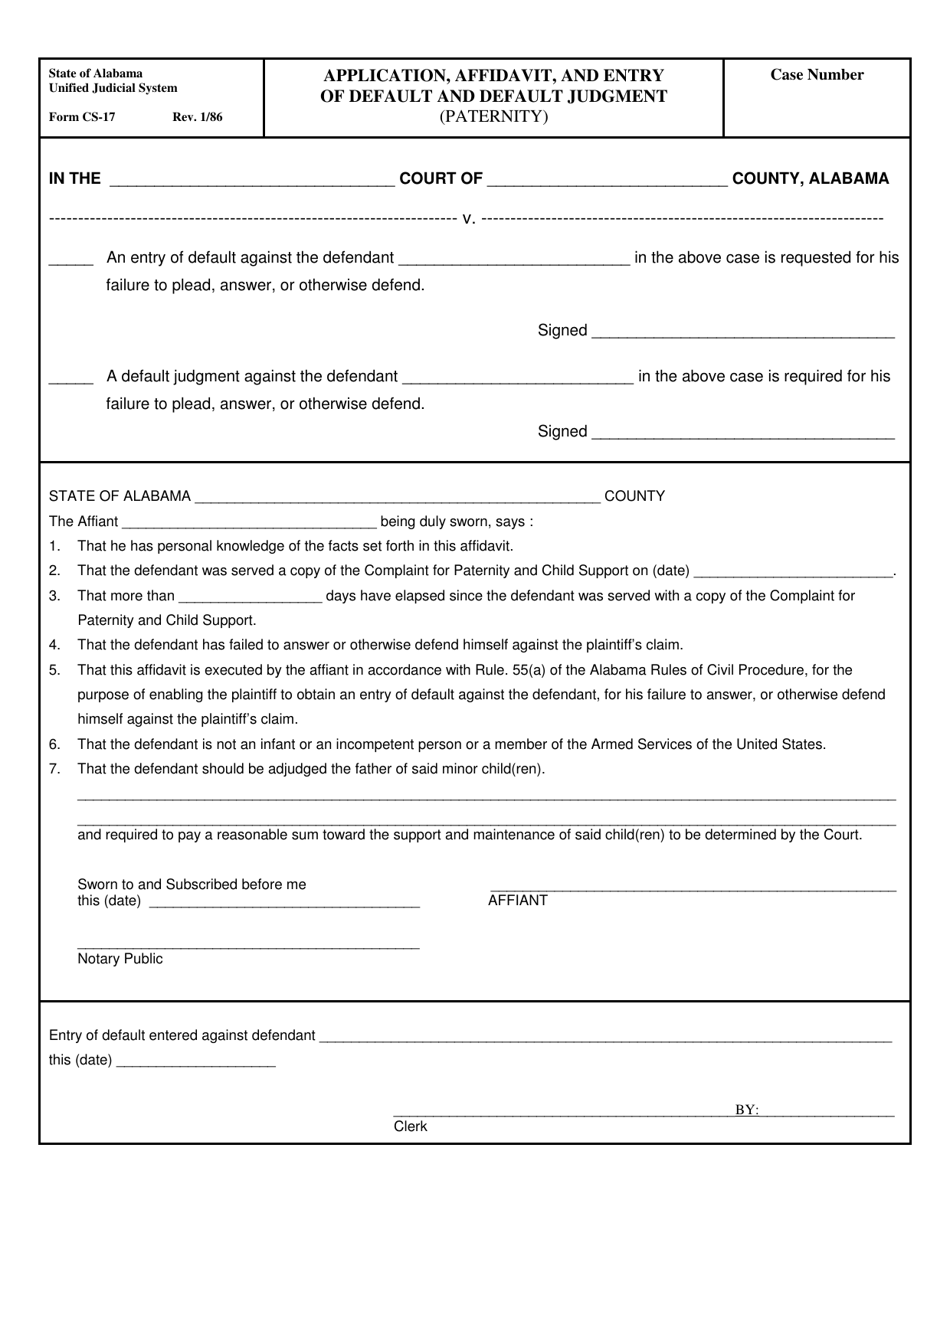 Form CS-17 Application, Affidavit, Entry of Default and Default Judgment (Paternity) - Alabama, Page 1